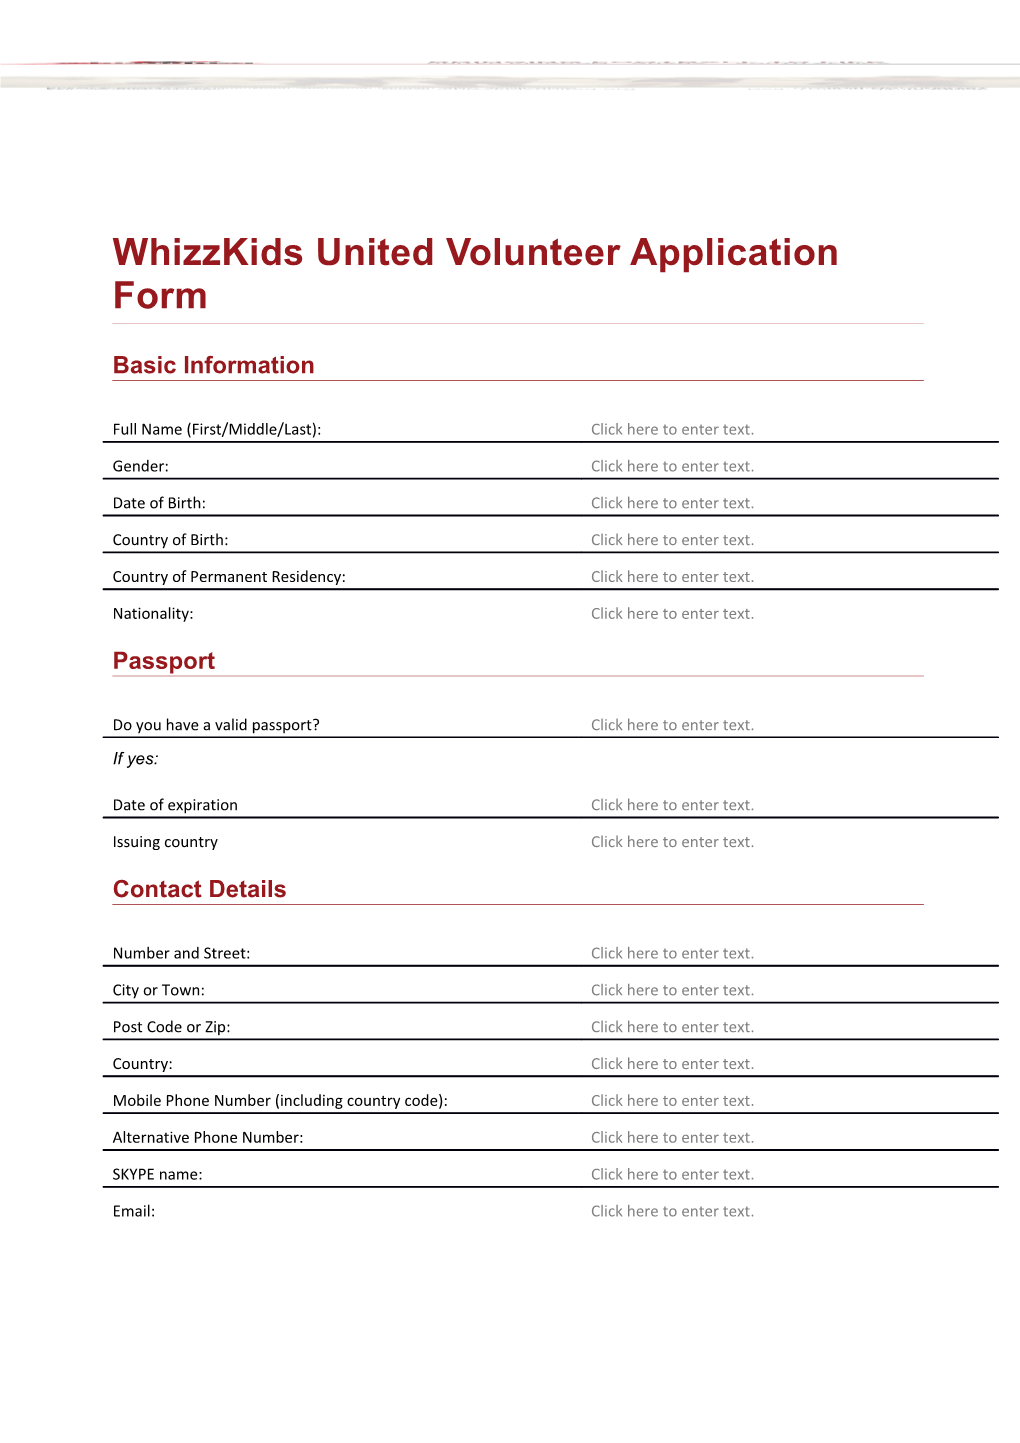 Whizzkids United Volunteer Application Form